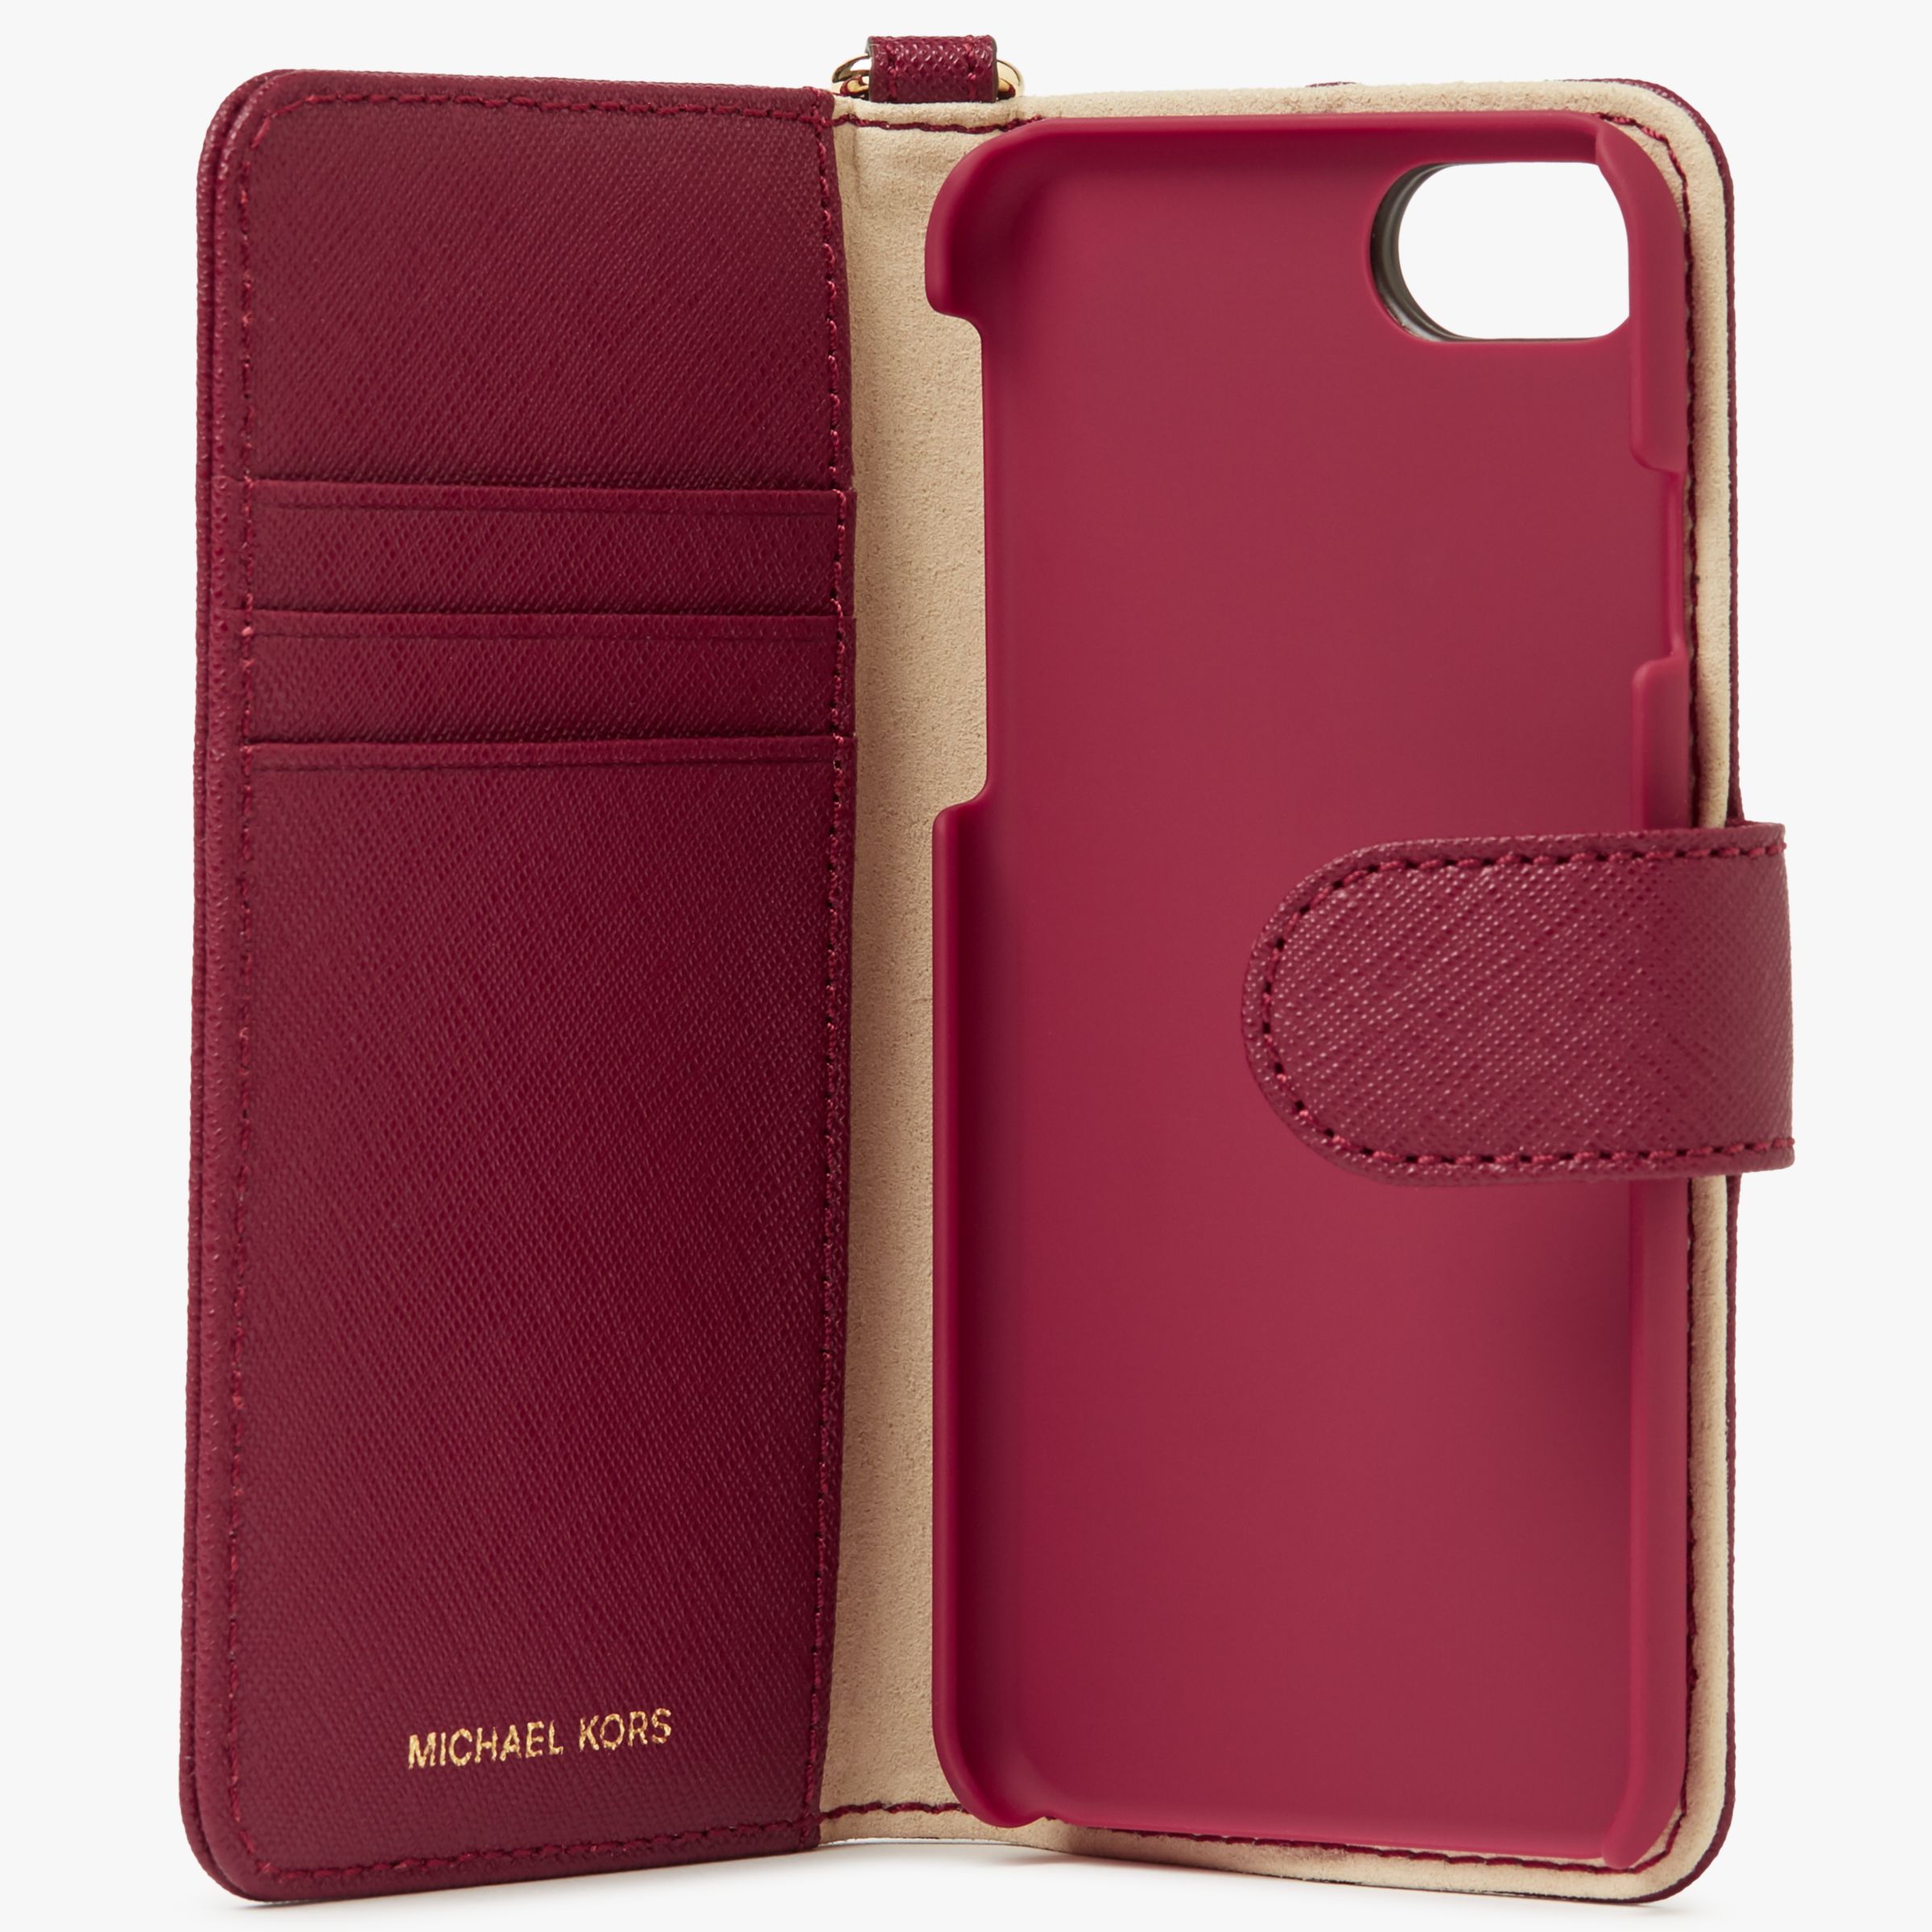 michael kors cell phone wallet case